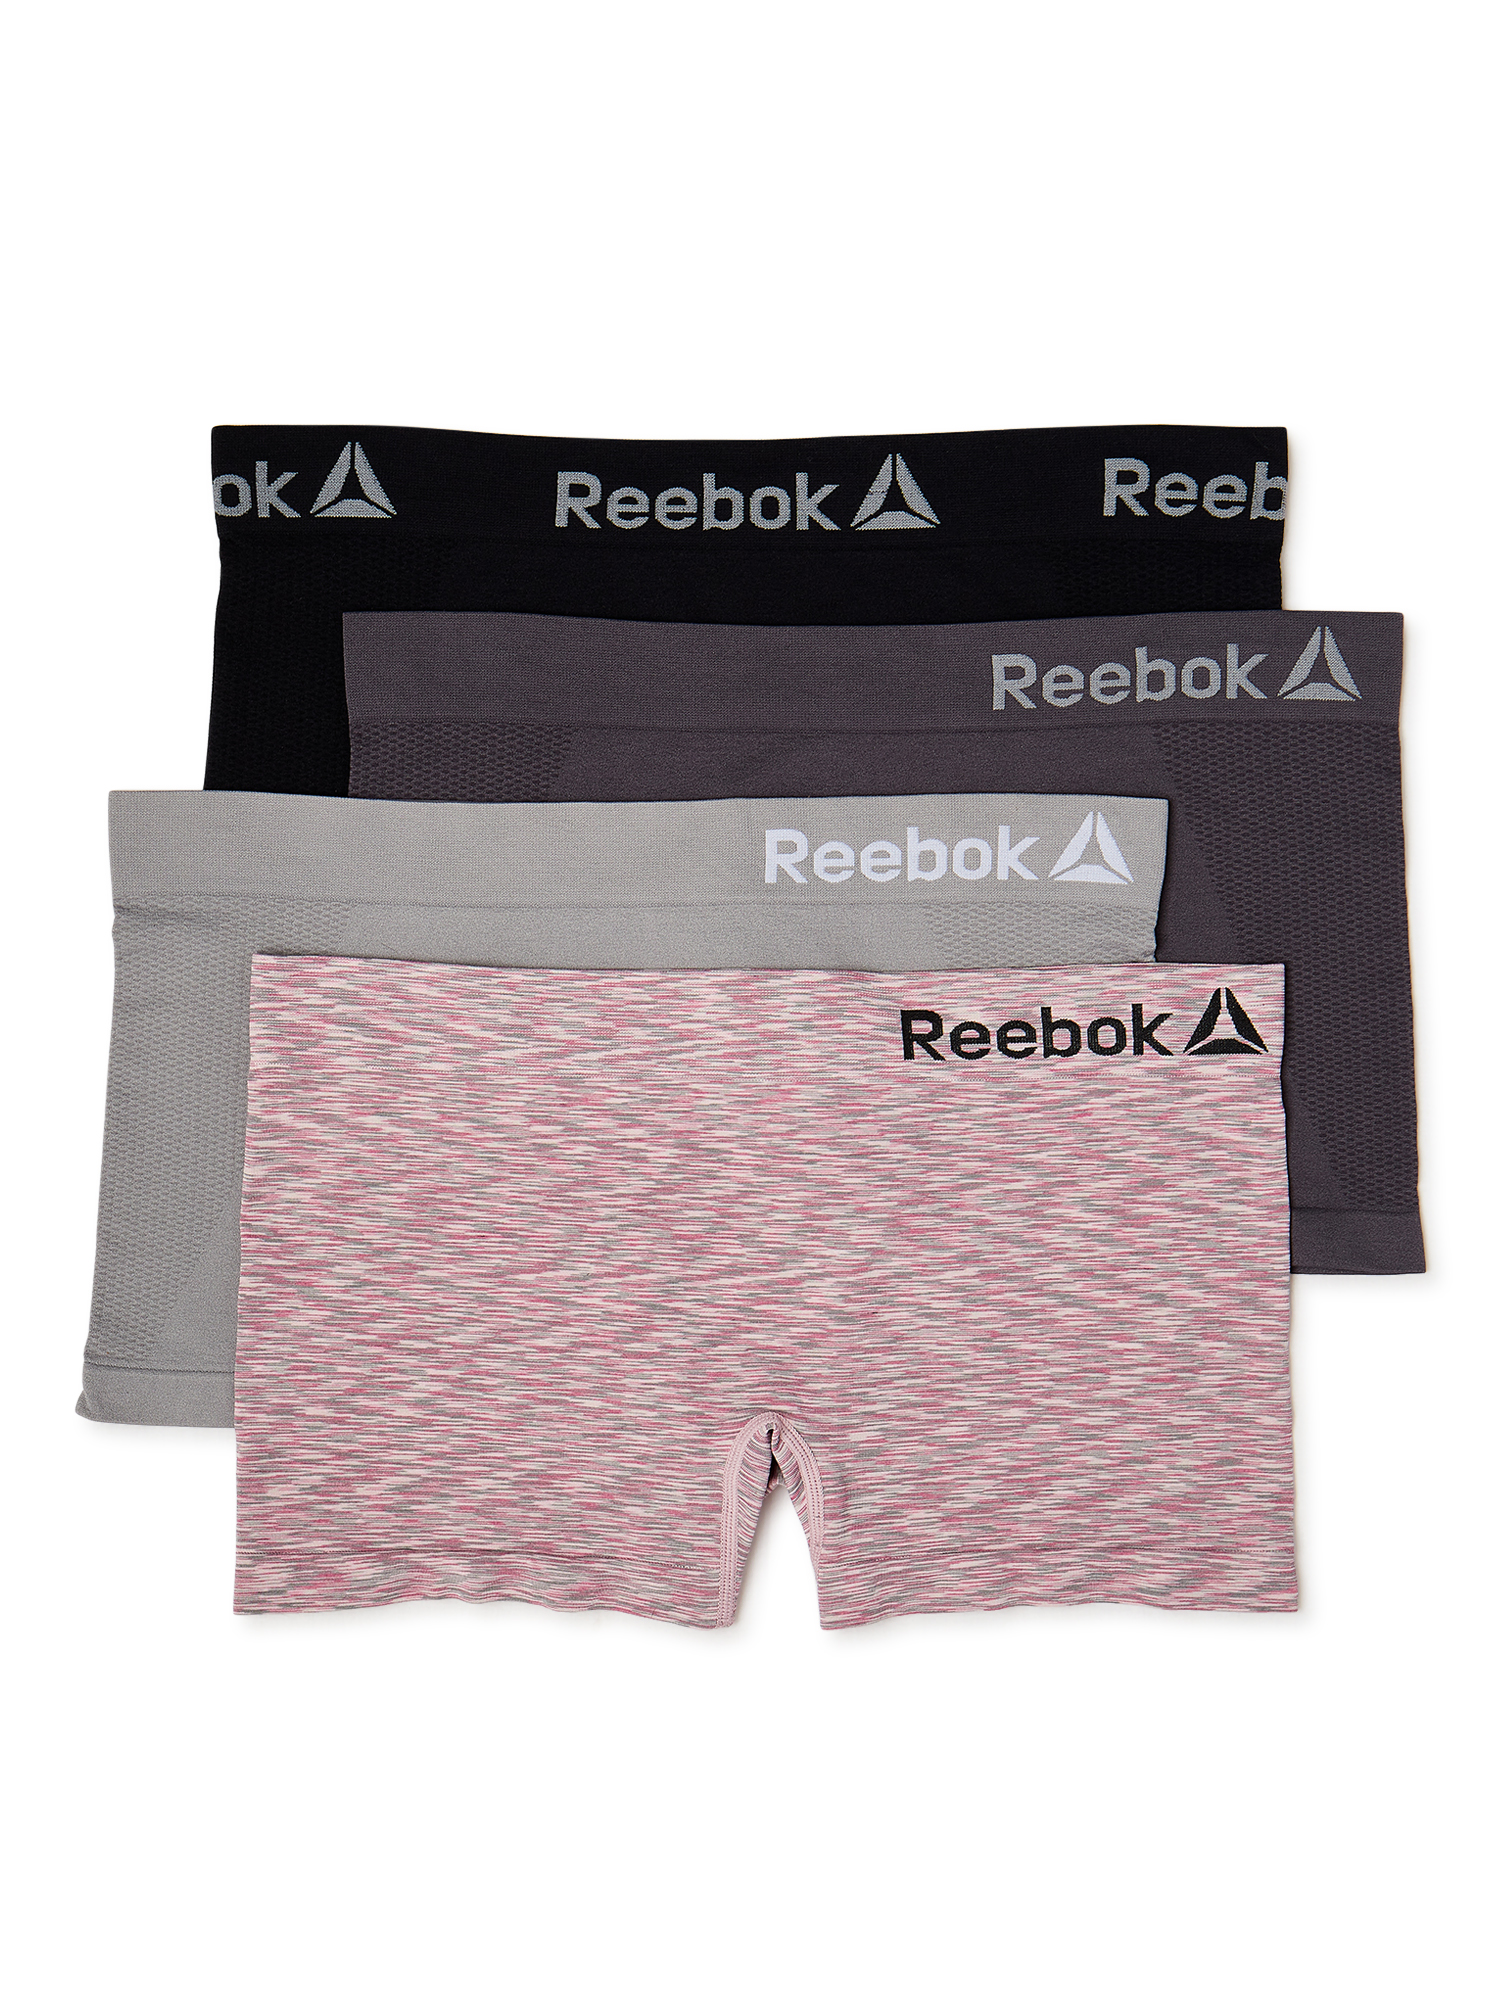 Reebok Women's Underwear Seamless Boyshort Panties, 4-Pack - image 4 of 6